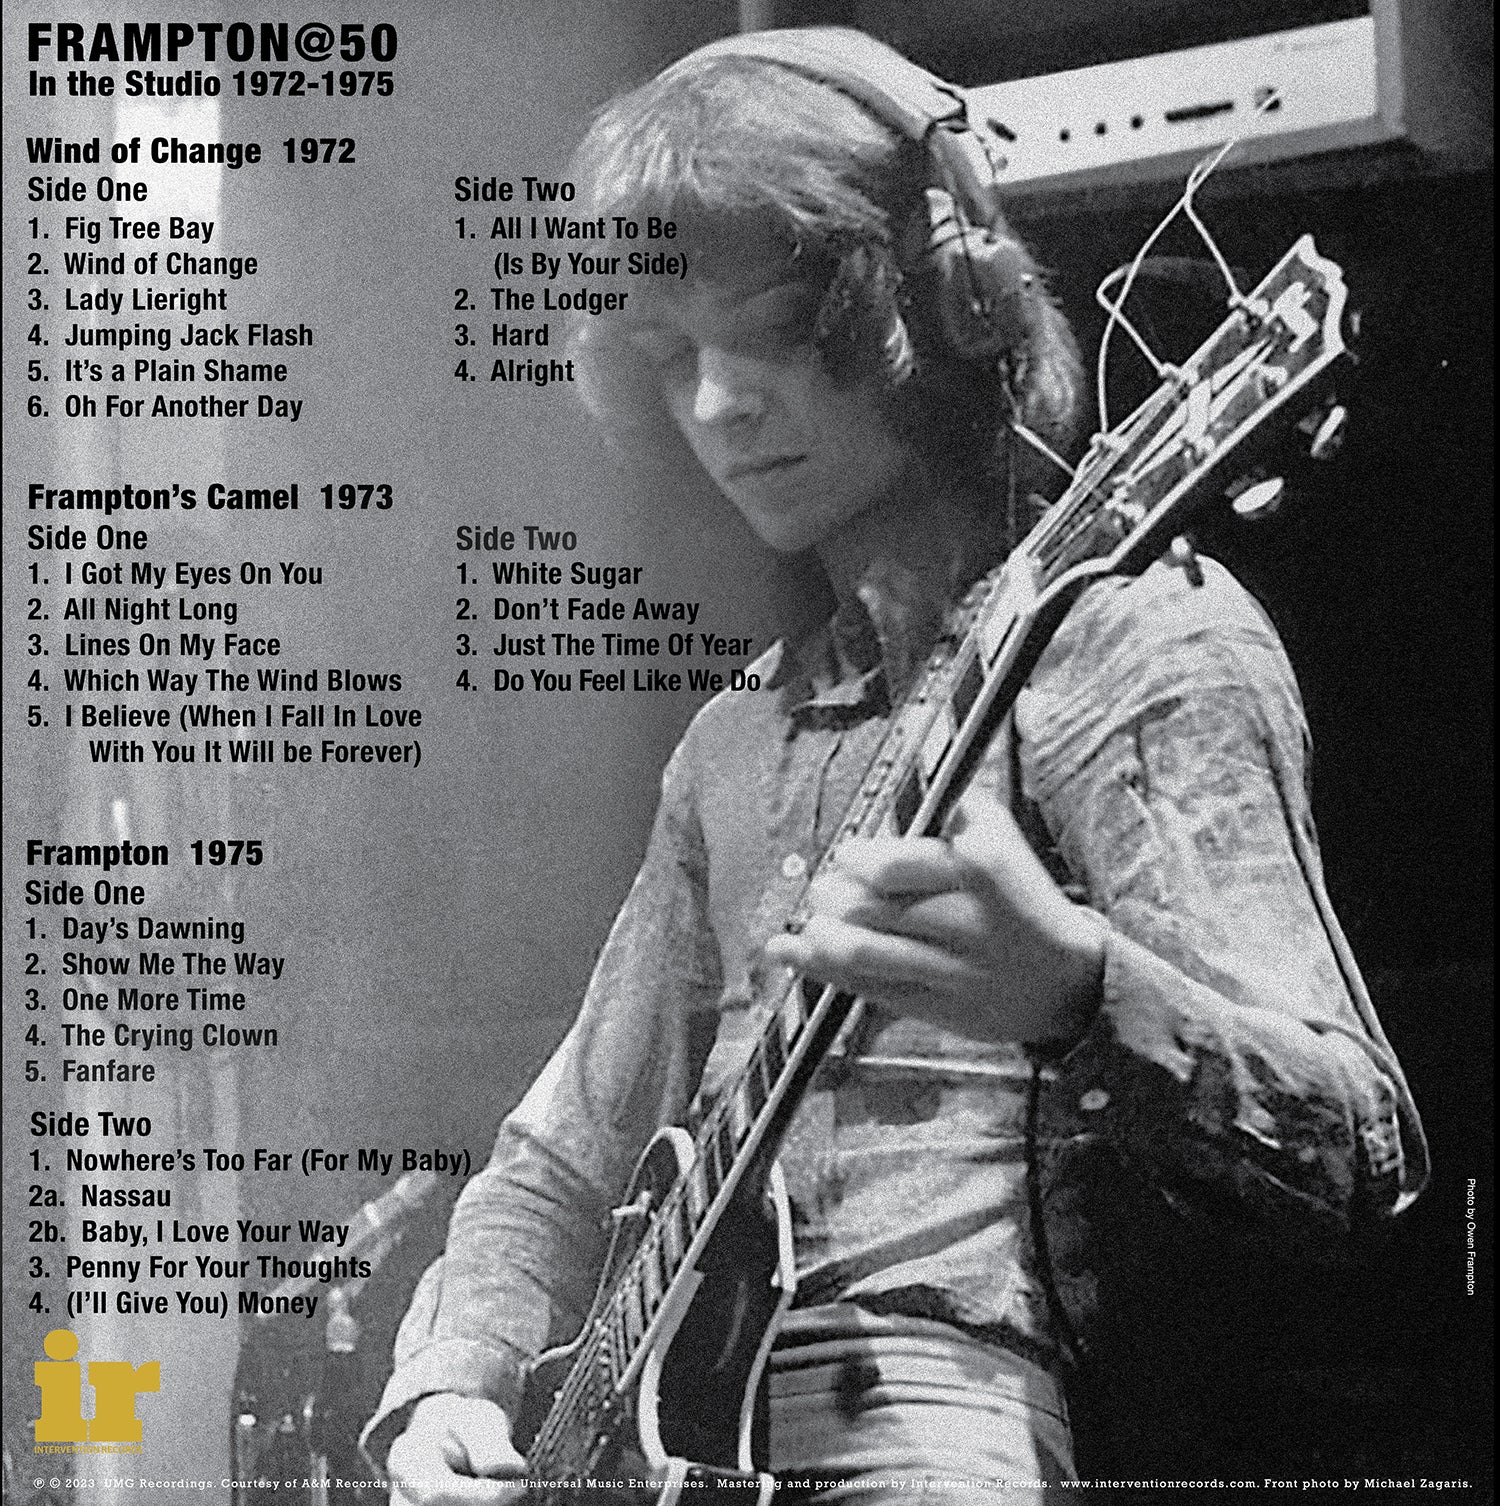 Peter Frampton Frampton@50: In the Studio 1972-1975 Limited Edition Vinyl  Box Set (SHIPPING NOW!)